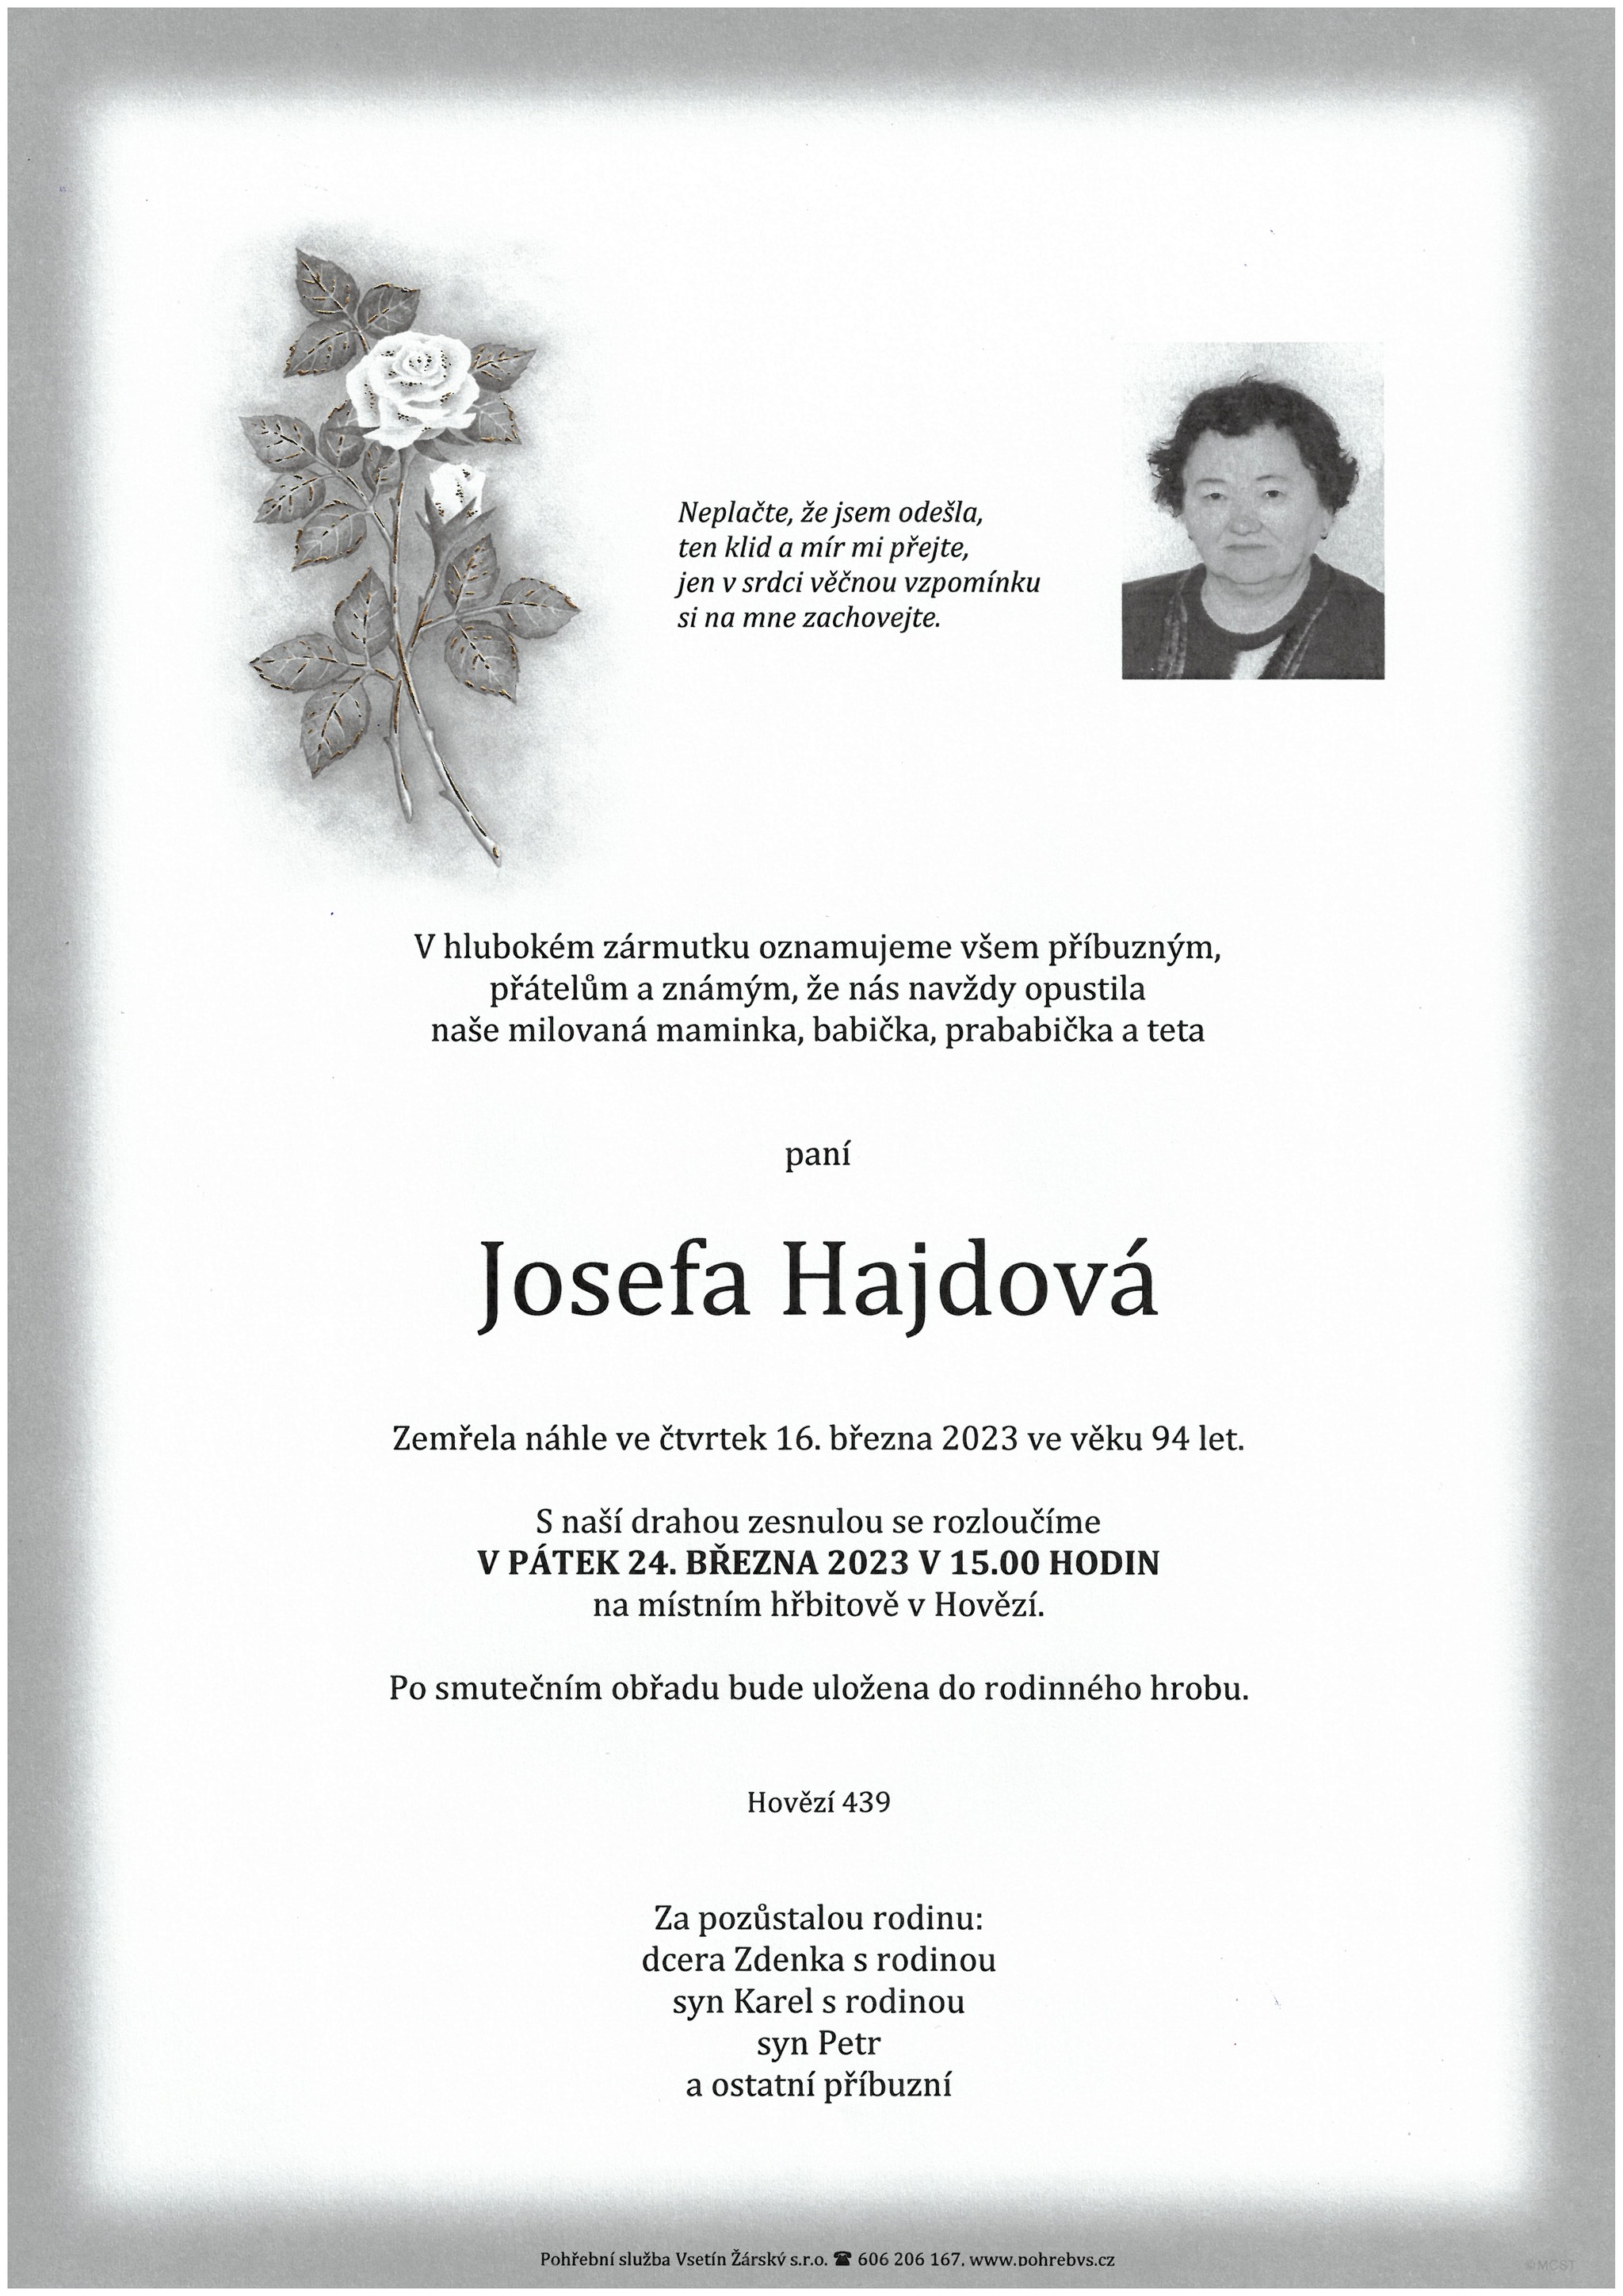 Josefa Hajdová